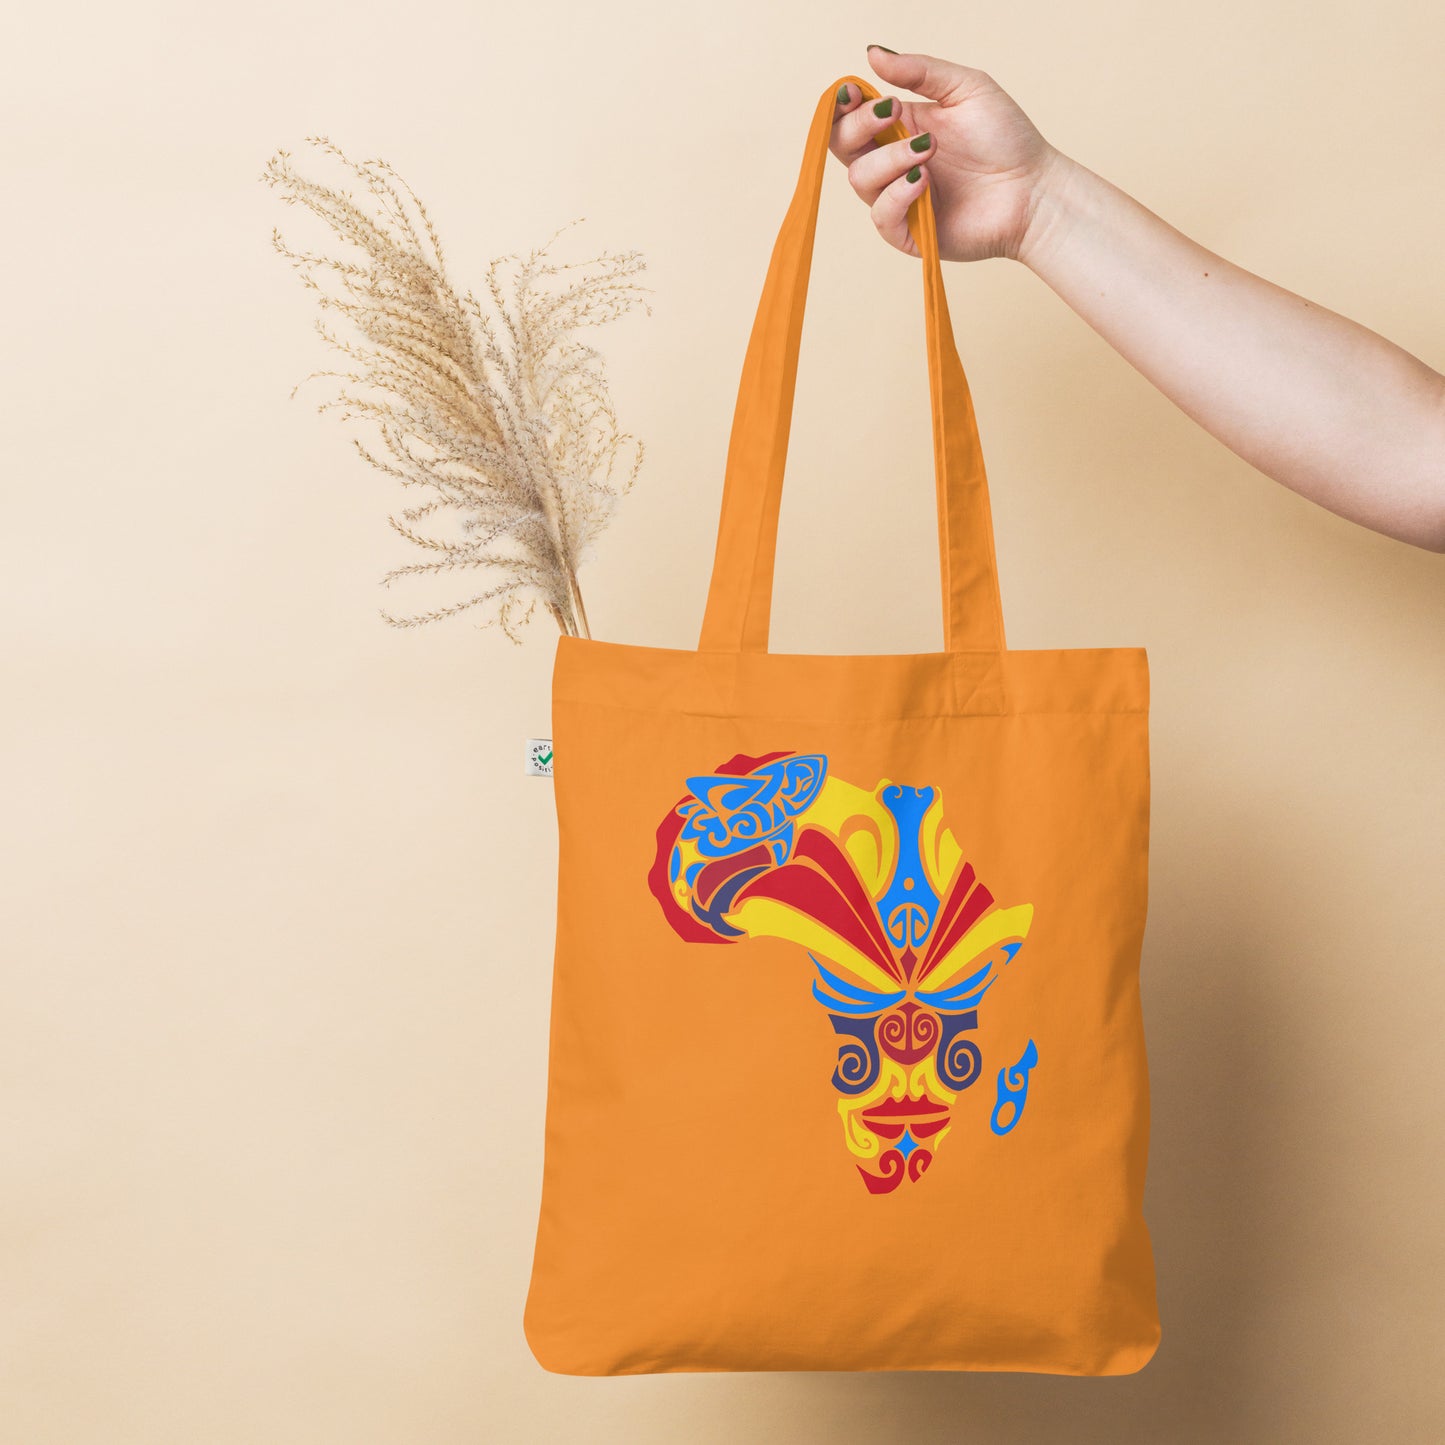 Organic Fashion Tote Bag - Banamerica Collection